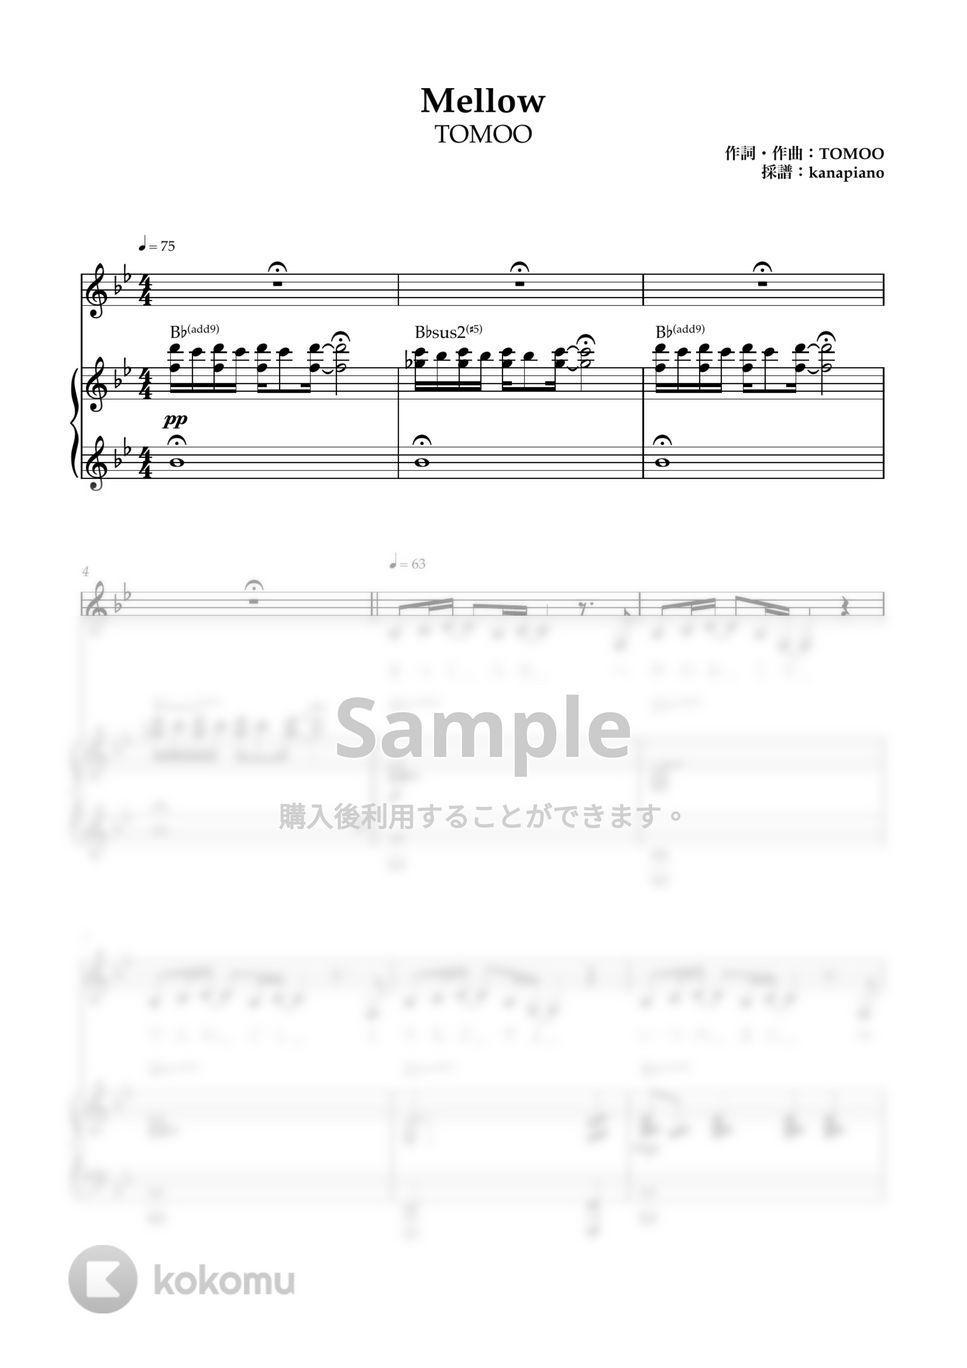 TOMOO - Mellow (ピアノ伴奏/弾き語り/TOMOO/Mellow) by kanapiano